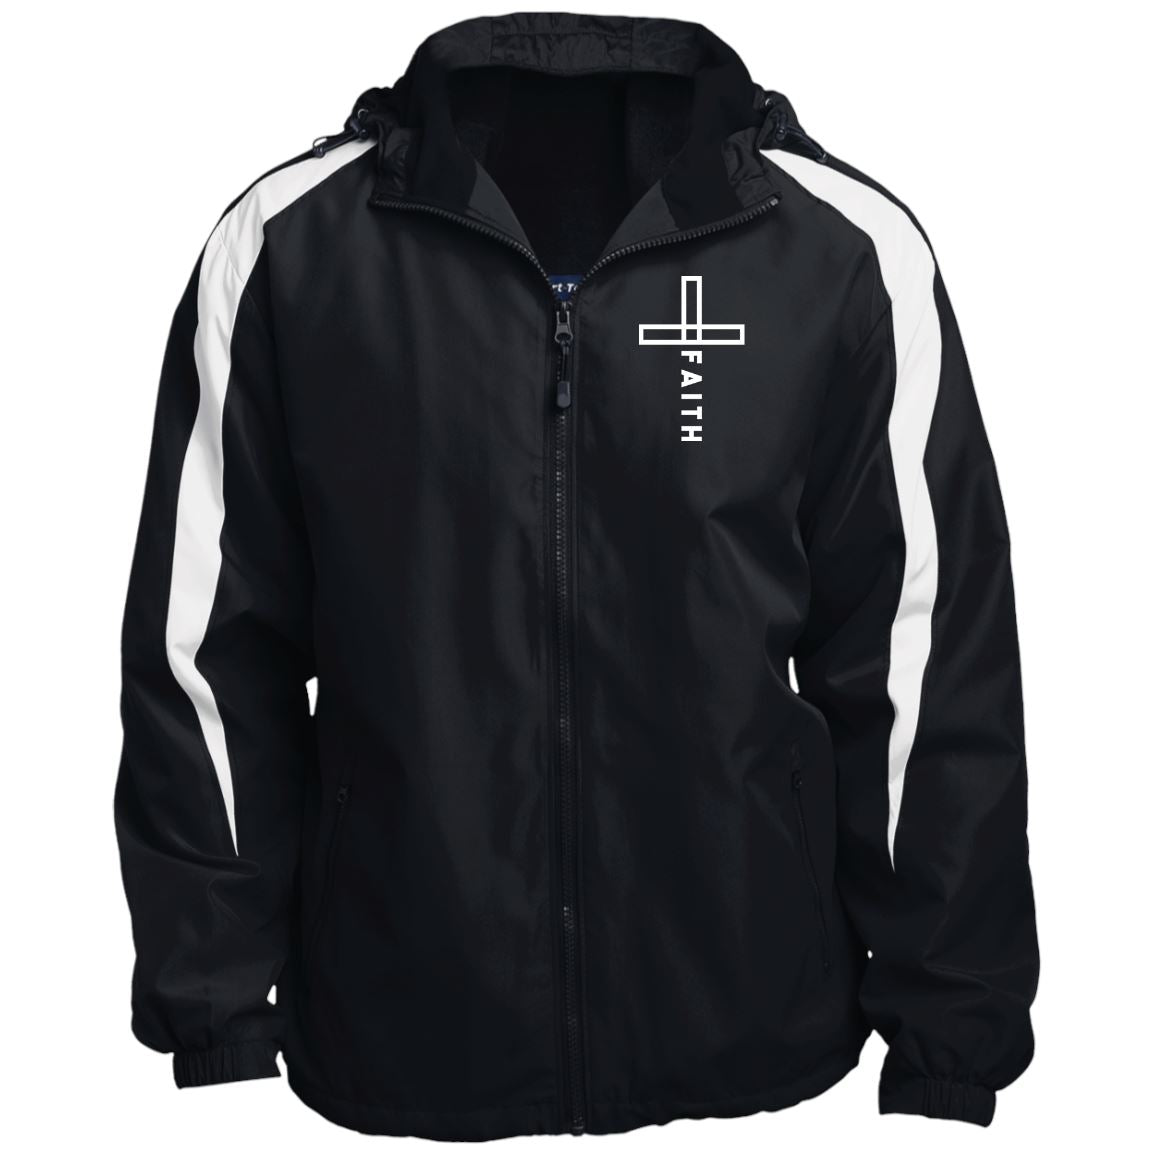 Cross Faith Fleece Lined Colorblocked Hooded Christian Jacket CustomCat Black/White X-Small 